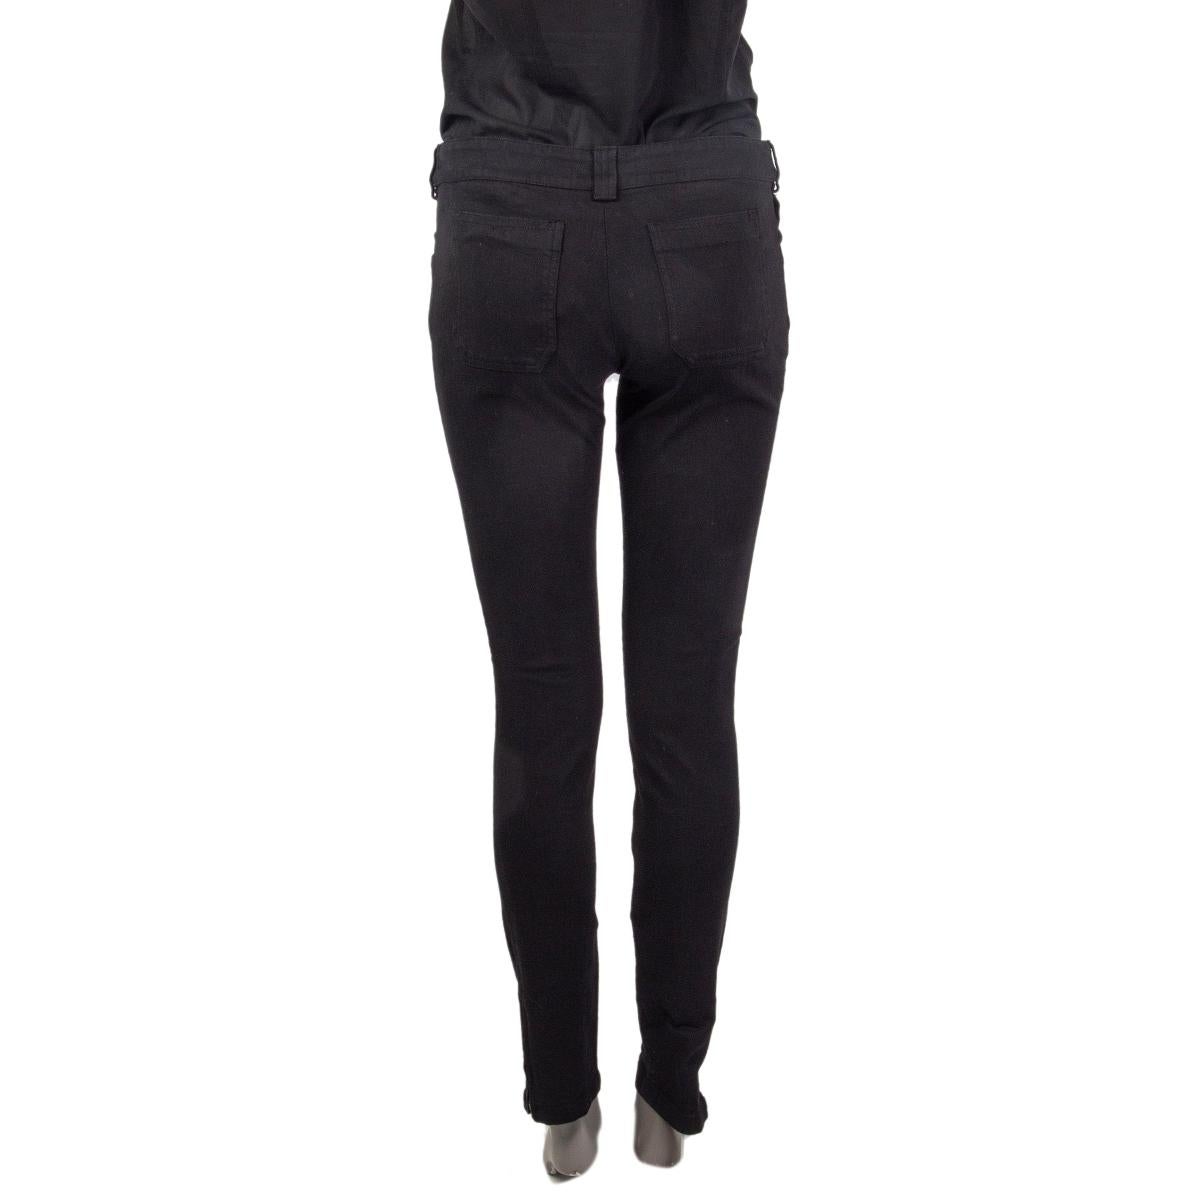 Black BALENCIAGA black cotton DENIM SKINNY JEANS Pants 38 S For Sale